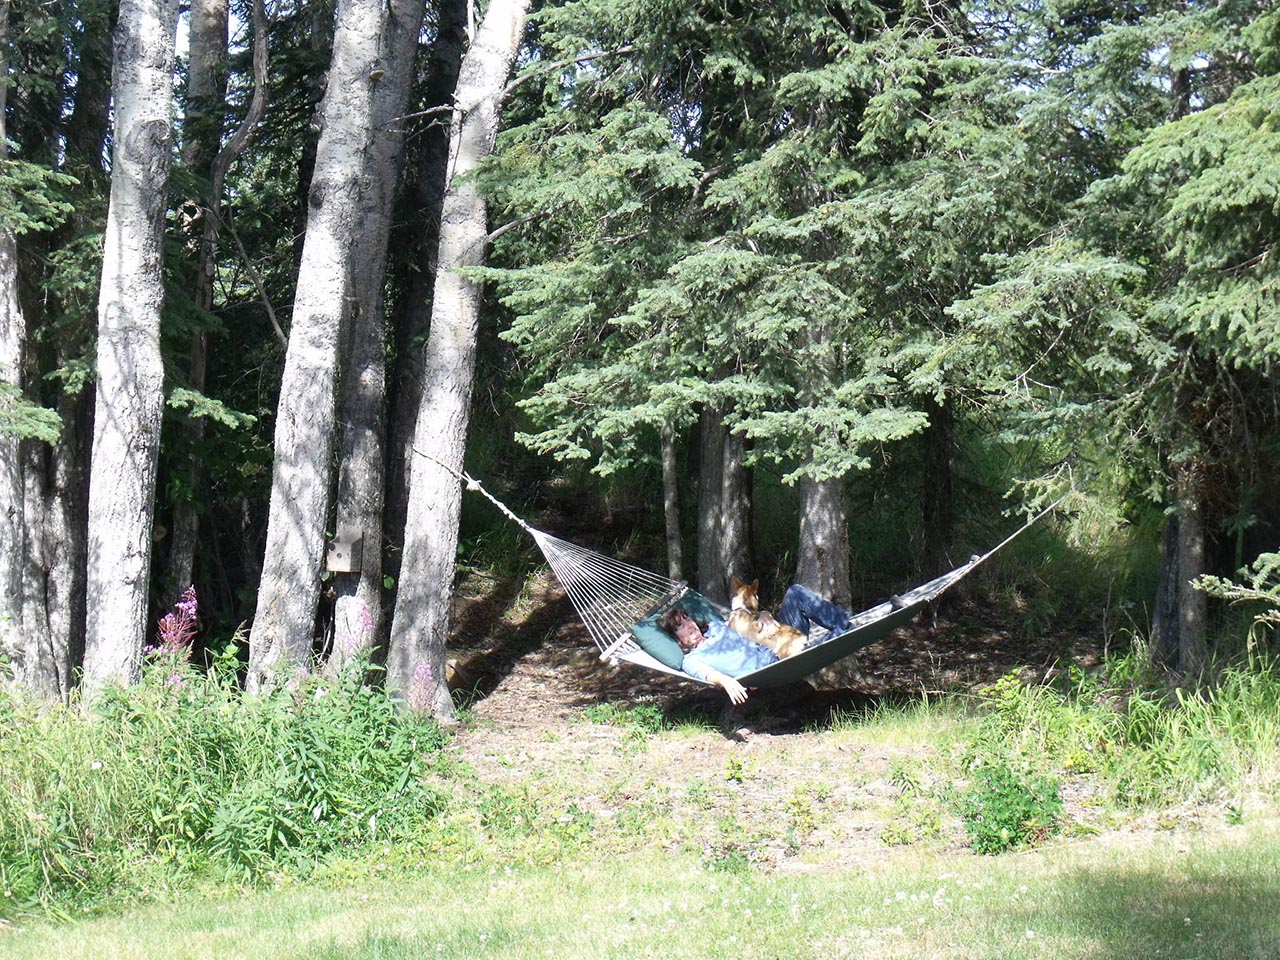 Guest in a hammock.